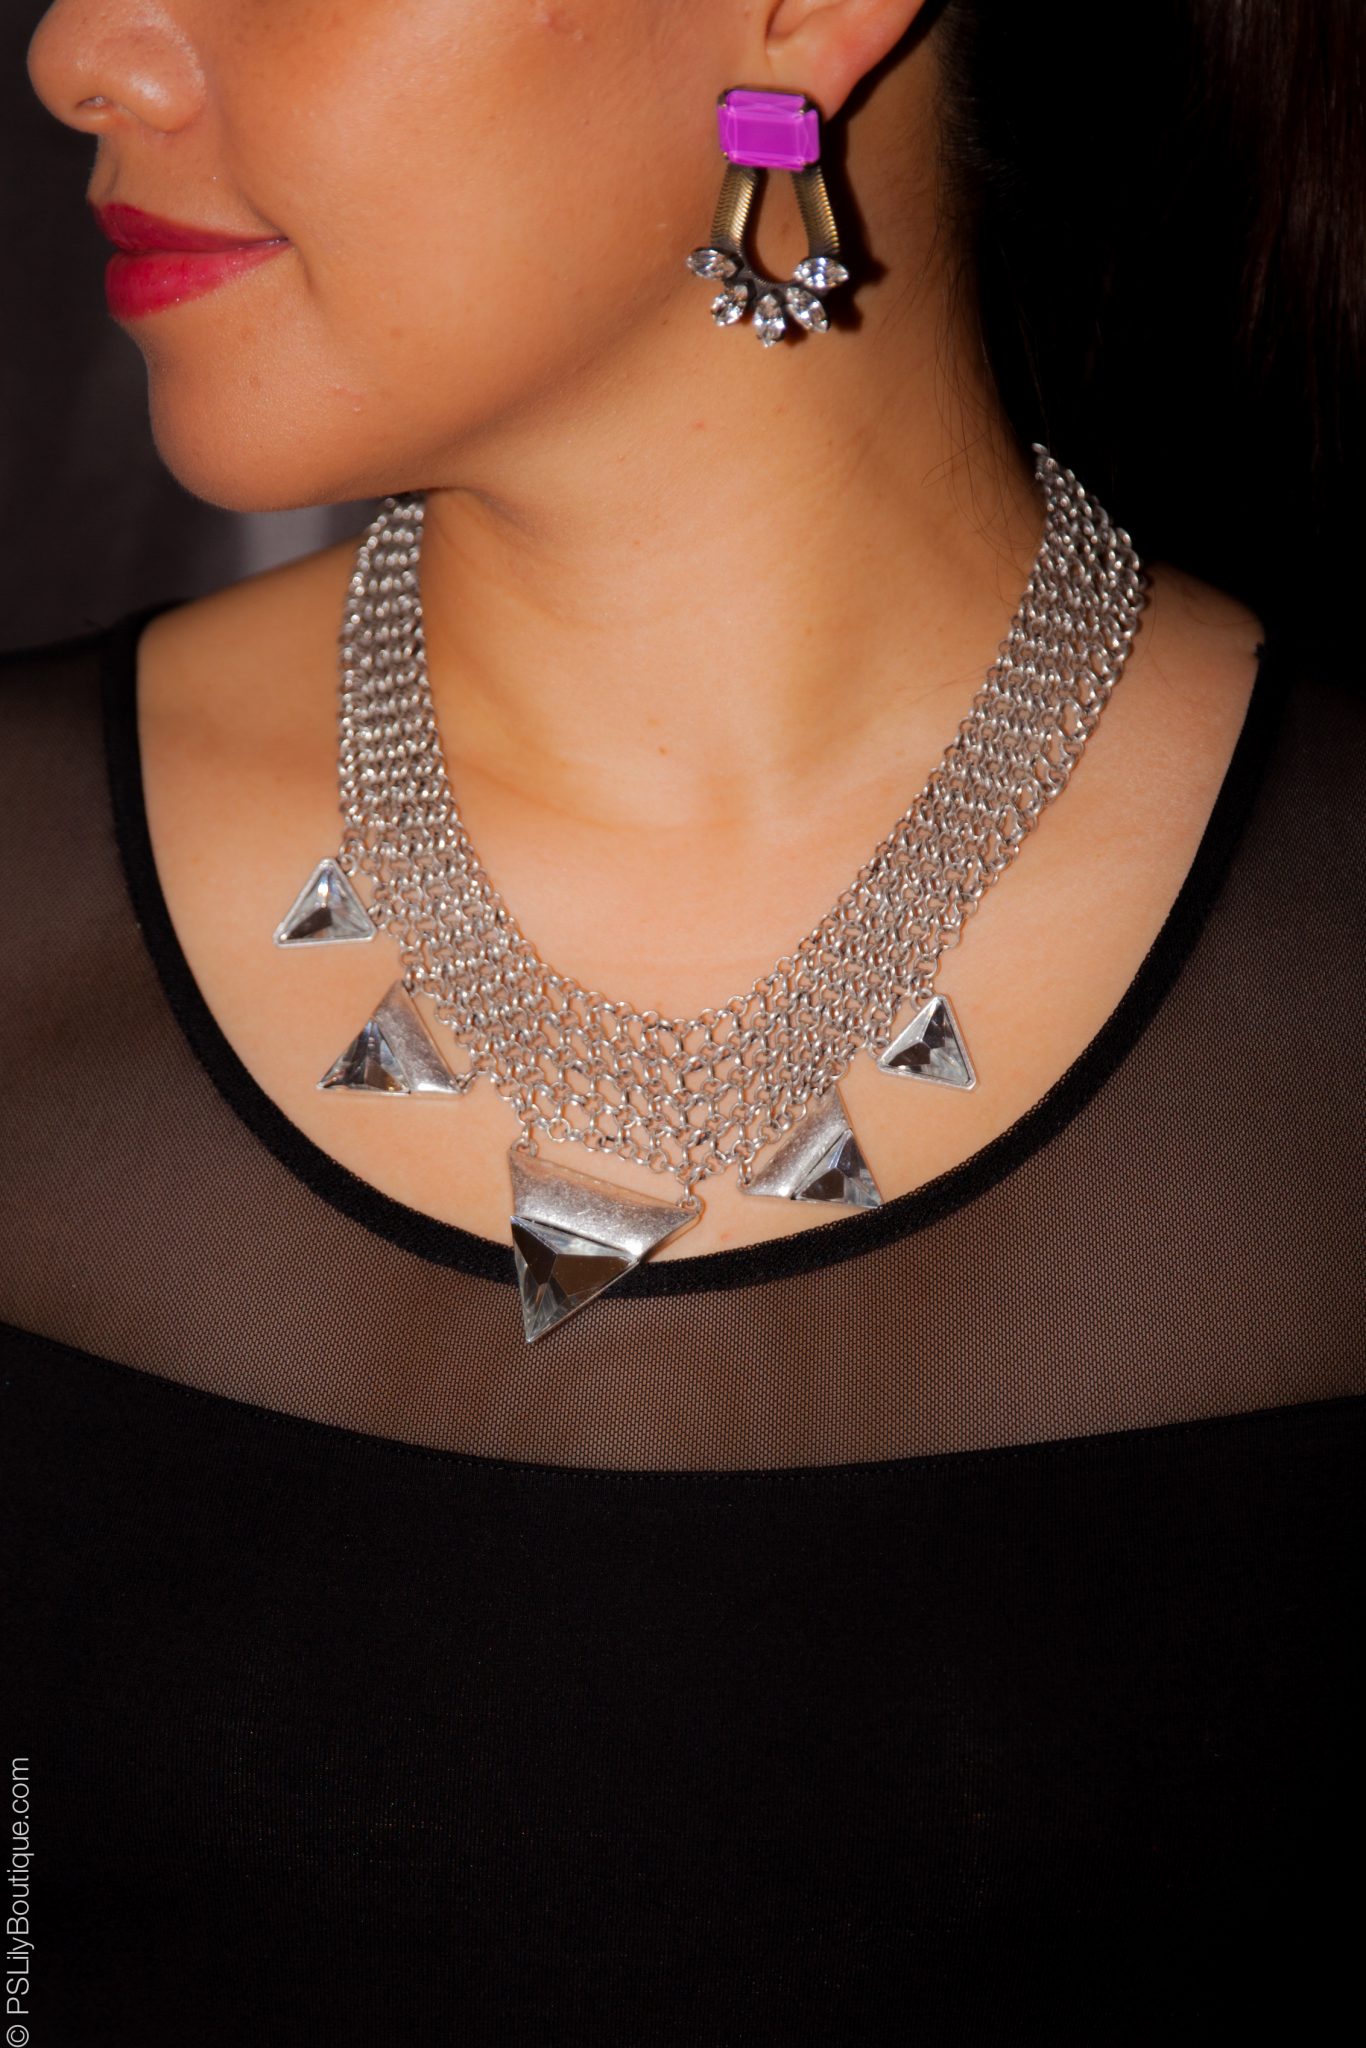 Illumina | Instagram pslilyboutique, los angeles fashion blogger, necklace, earring